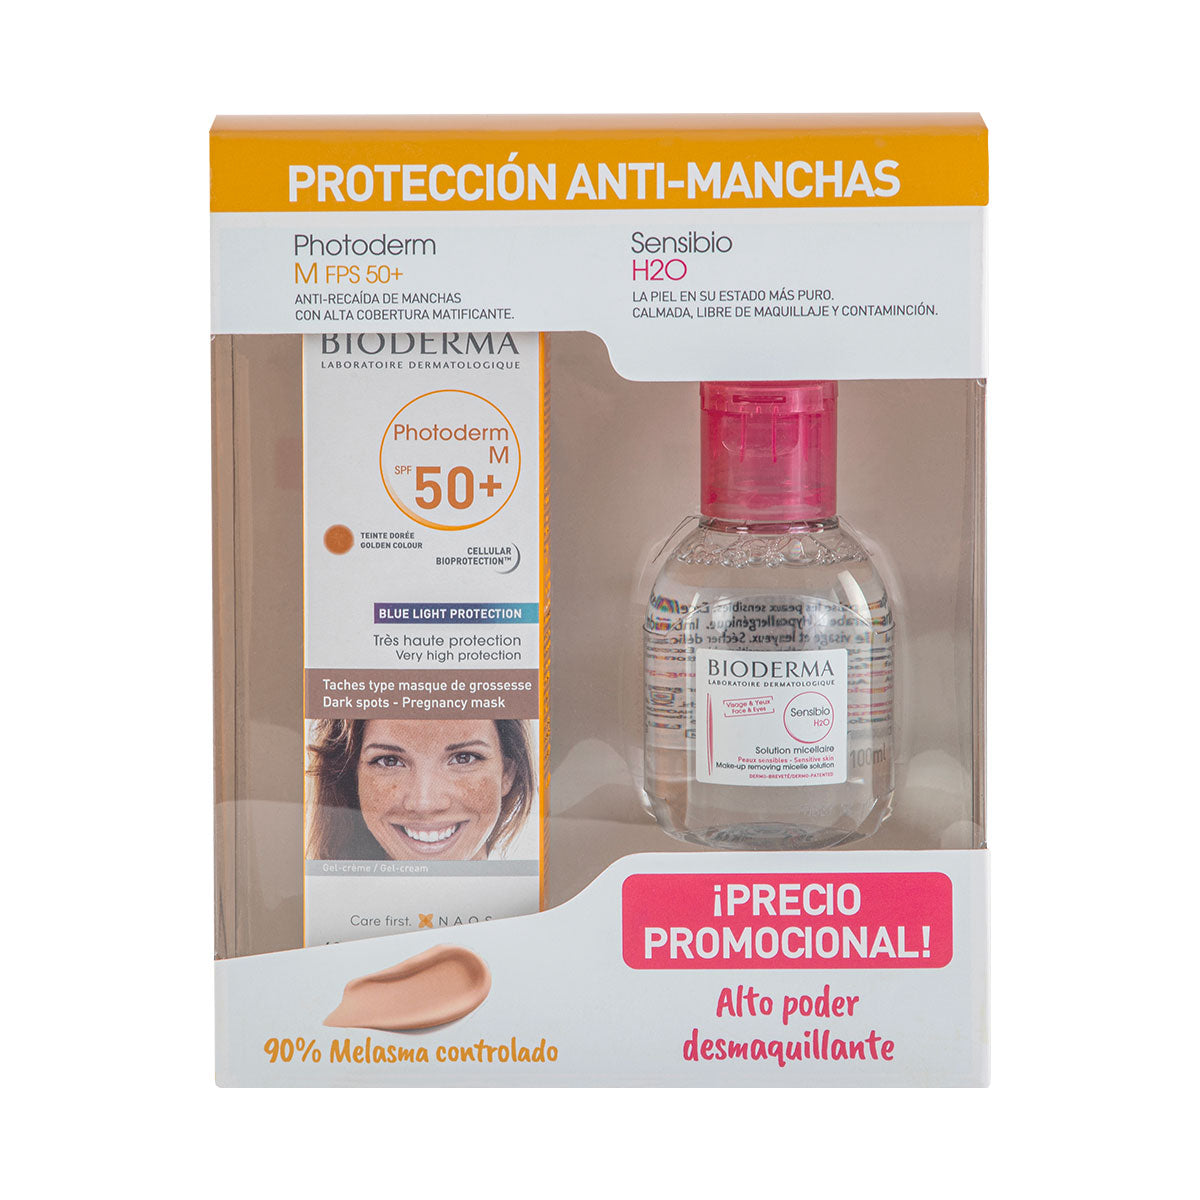 Bioderma Kit protección anti-manchas, Photoderm M FPS50+, 40ml + Sensibio H2O, 100ml